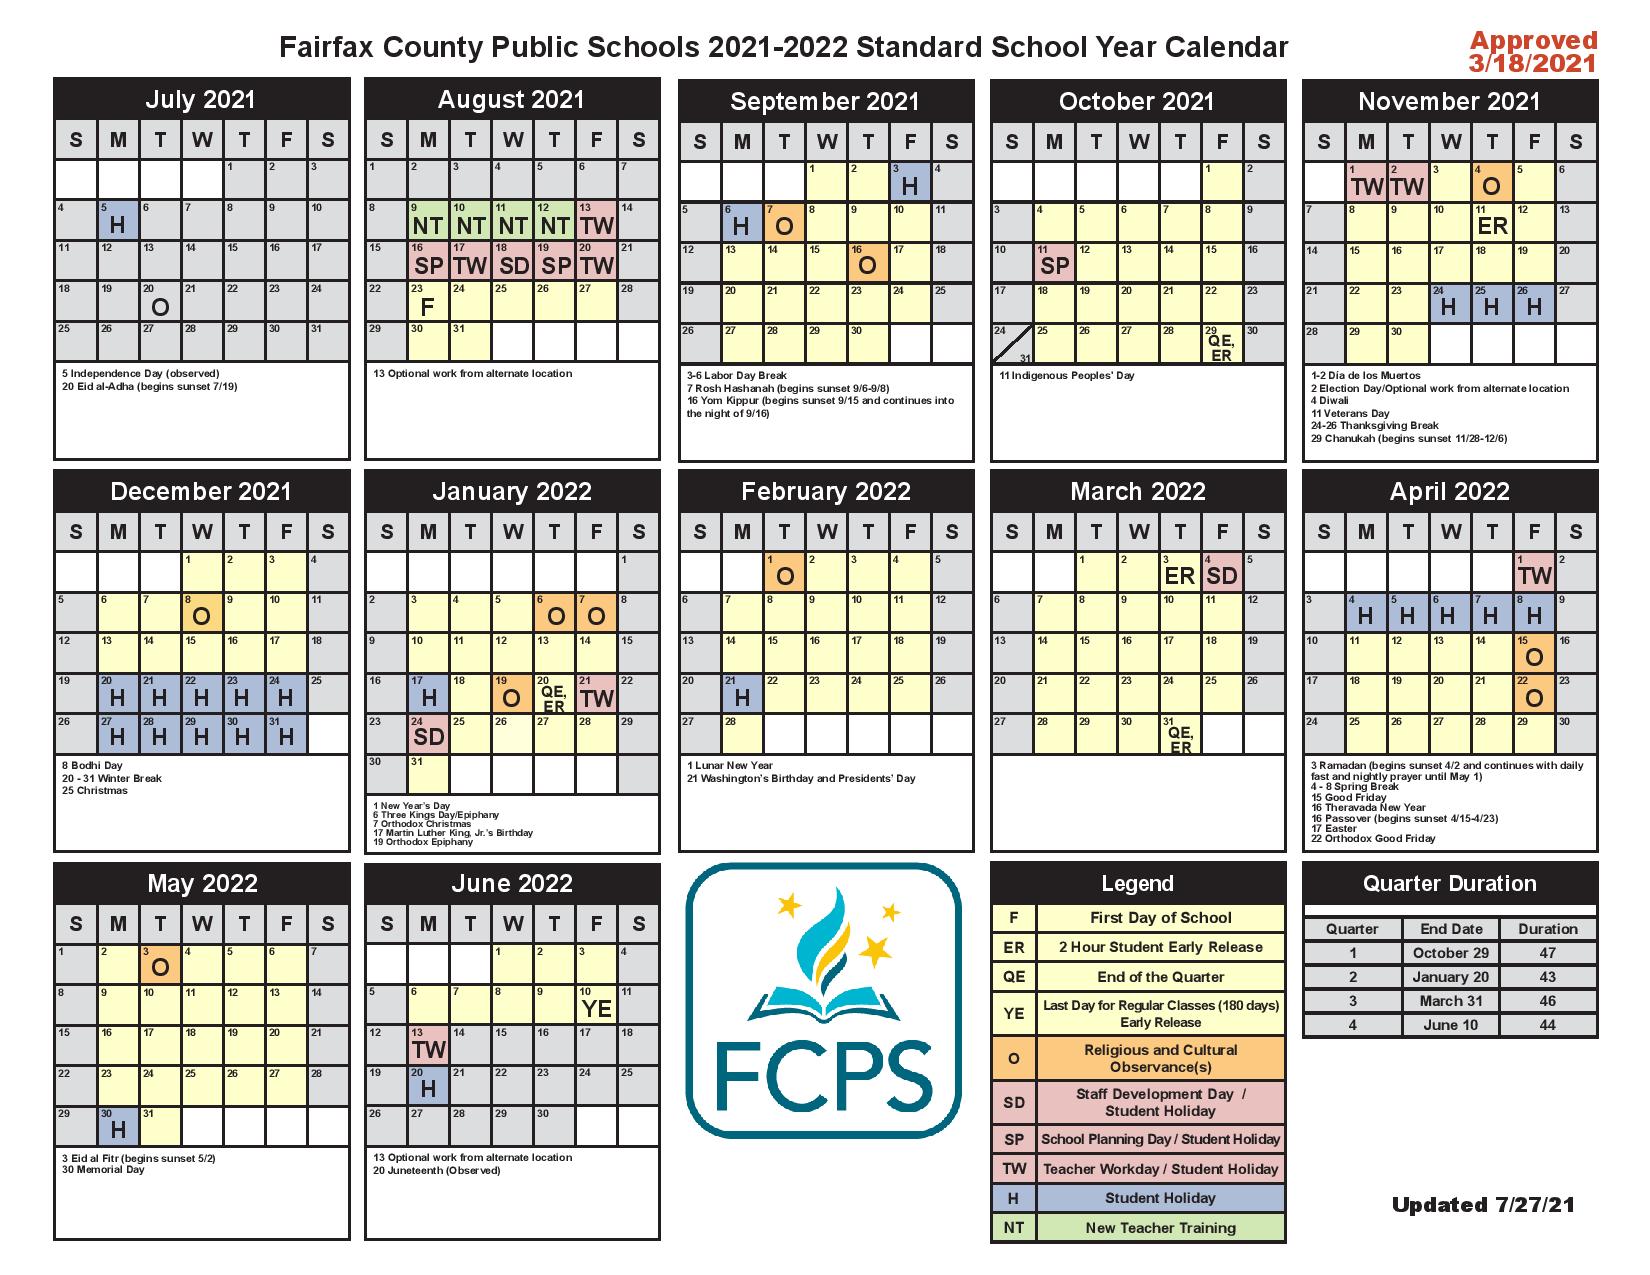 Fairfax County Public Schools Calendar 2021 2022 Holidays